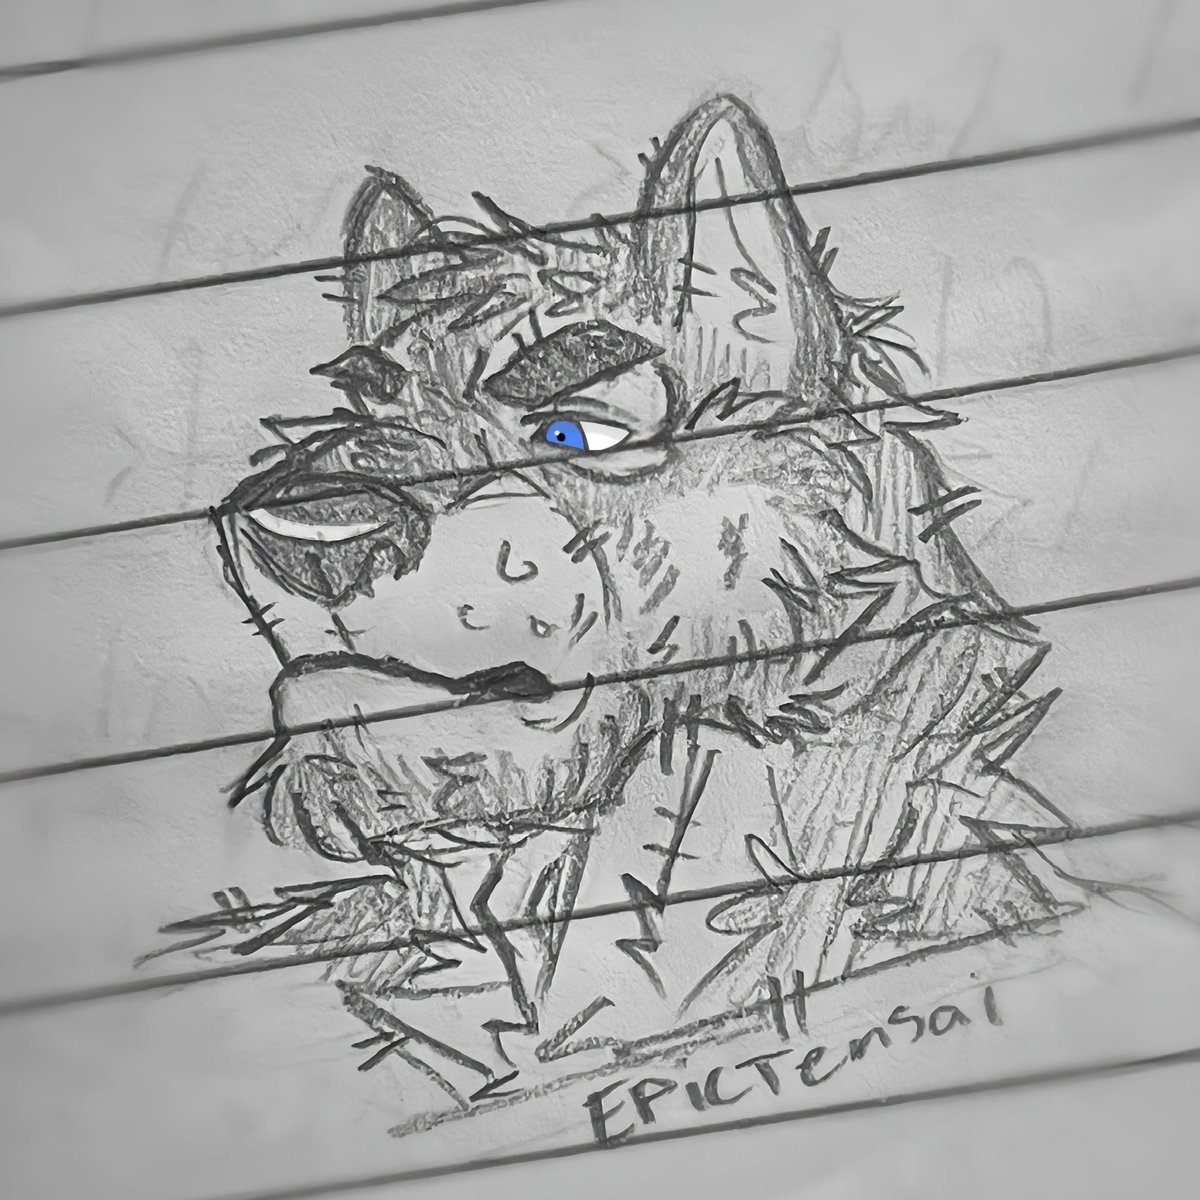 Which color fits him best?
#art #digitalart #traditionalart #sketch #doodle #originalcharacter #furryoc #anthro #anthroart #furryanthro #furryferal #furry #furryart #fursona #cutefurry #gayfurry #bufffurry #wolf #wolffurry #bear #dogfurry #werewolf #canine #wolfdog #wolffursona